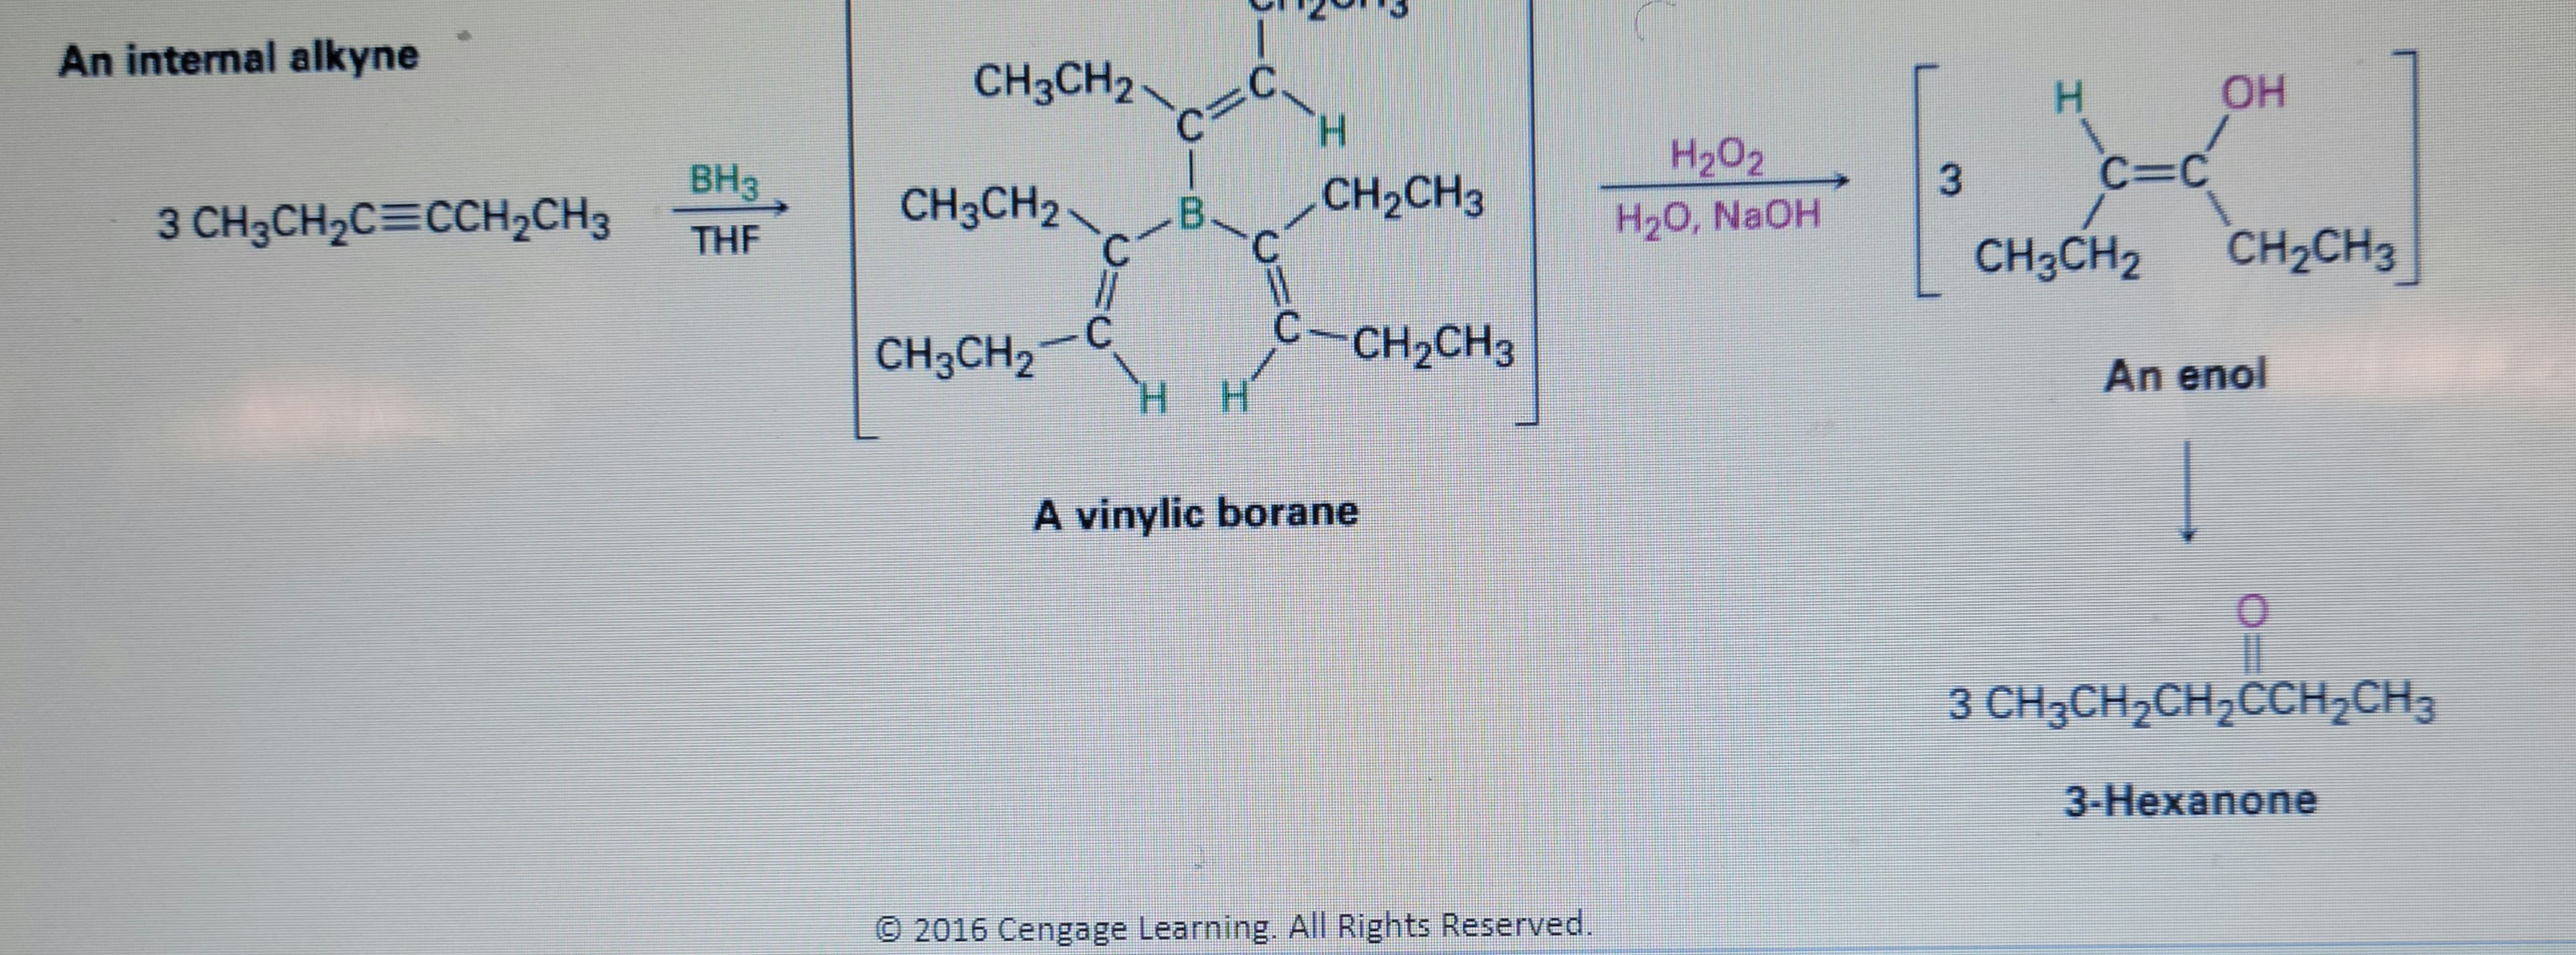 An internal alkyne
CH3CH2
H.
OH
H.
BH3
H202
3
C=C
CH3CH2
B.
CH2CH3
3 CH3CH2C=CCH2CH3
H20, NaOH
THF
C.
C.
CH3CH2
CH2CH3
-C
CH3CH2
C-CH2CH3
HH
An enol
A vinylic borane
3 CH3CH2CH2CCH2CH3
3-Hexanone
© 2016 Cengage Learning. All Rights Reserved.
